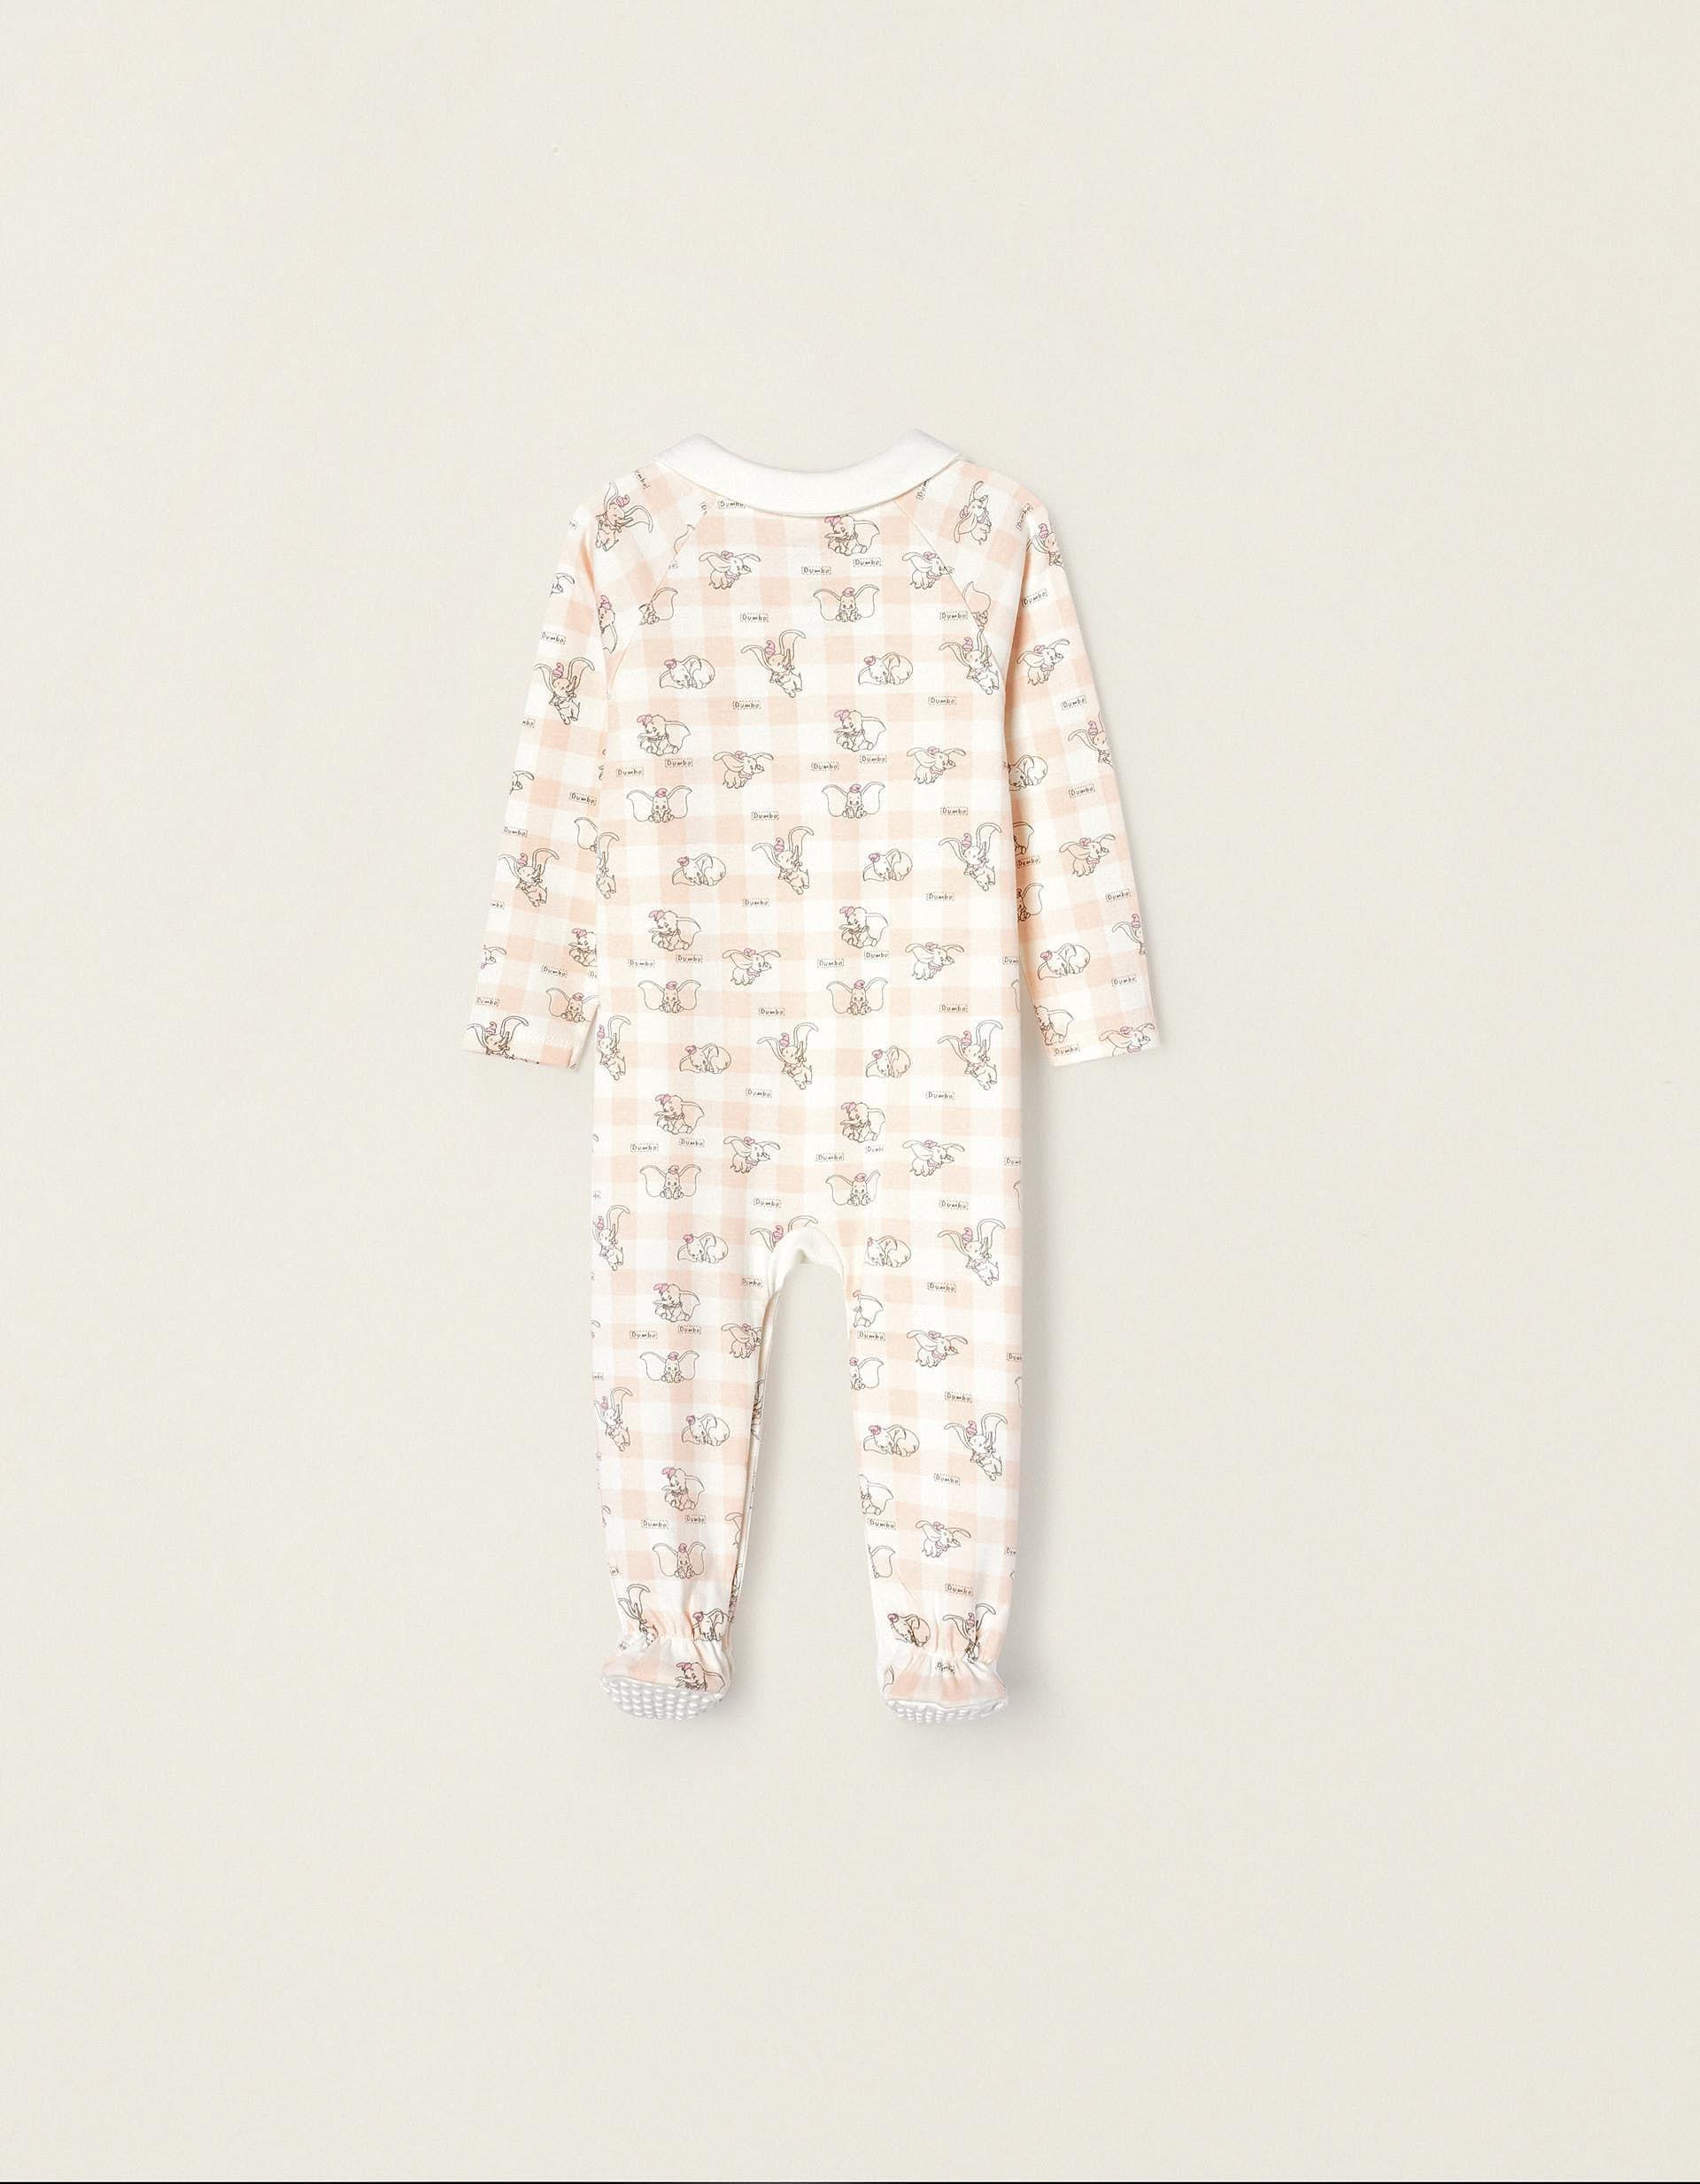 Zippy - White Cotton Sleepsuit, Baby Girls